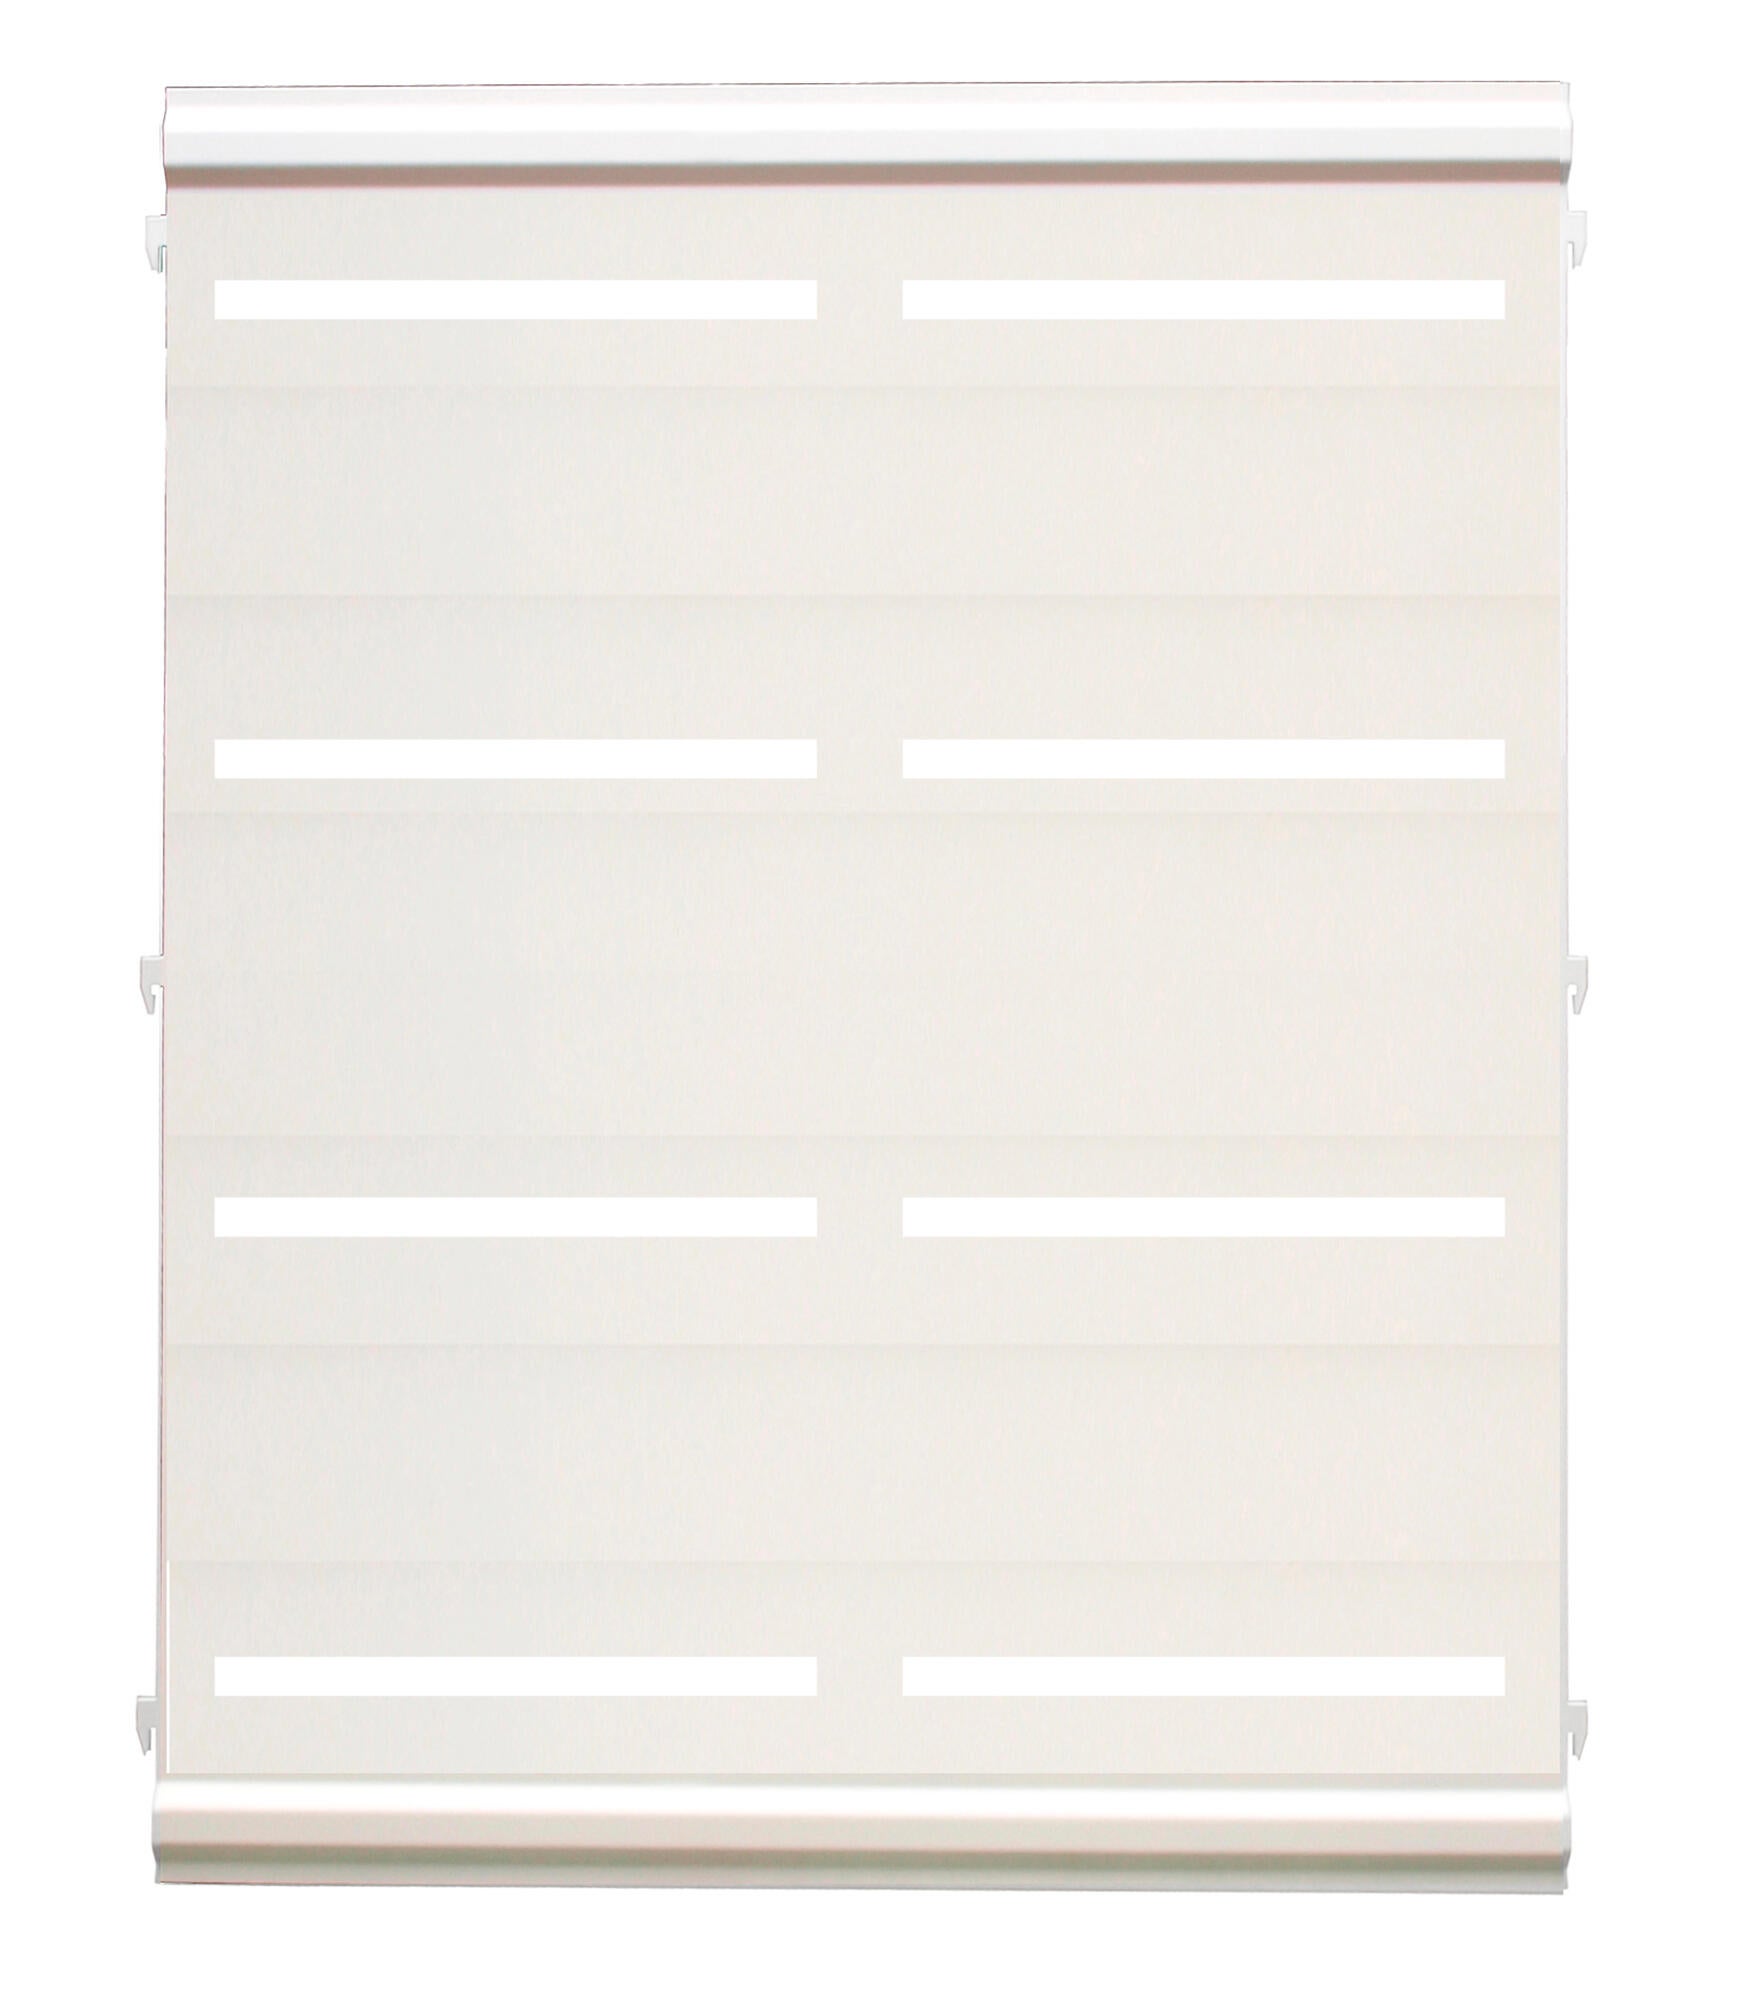 Panel remate valla acero galvanizado franja rayas blanco 94x73,5 cm